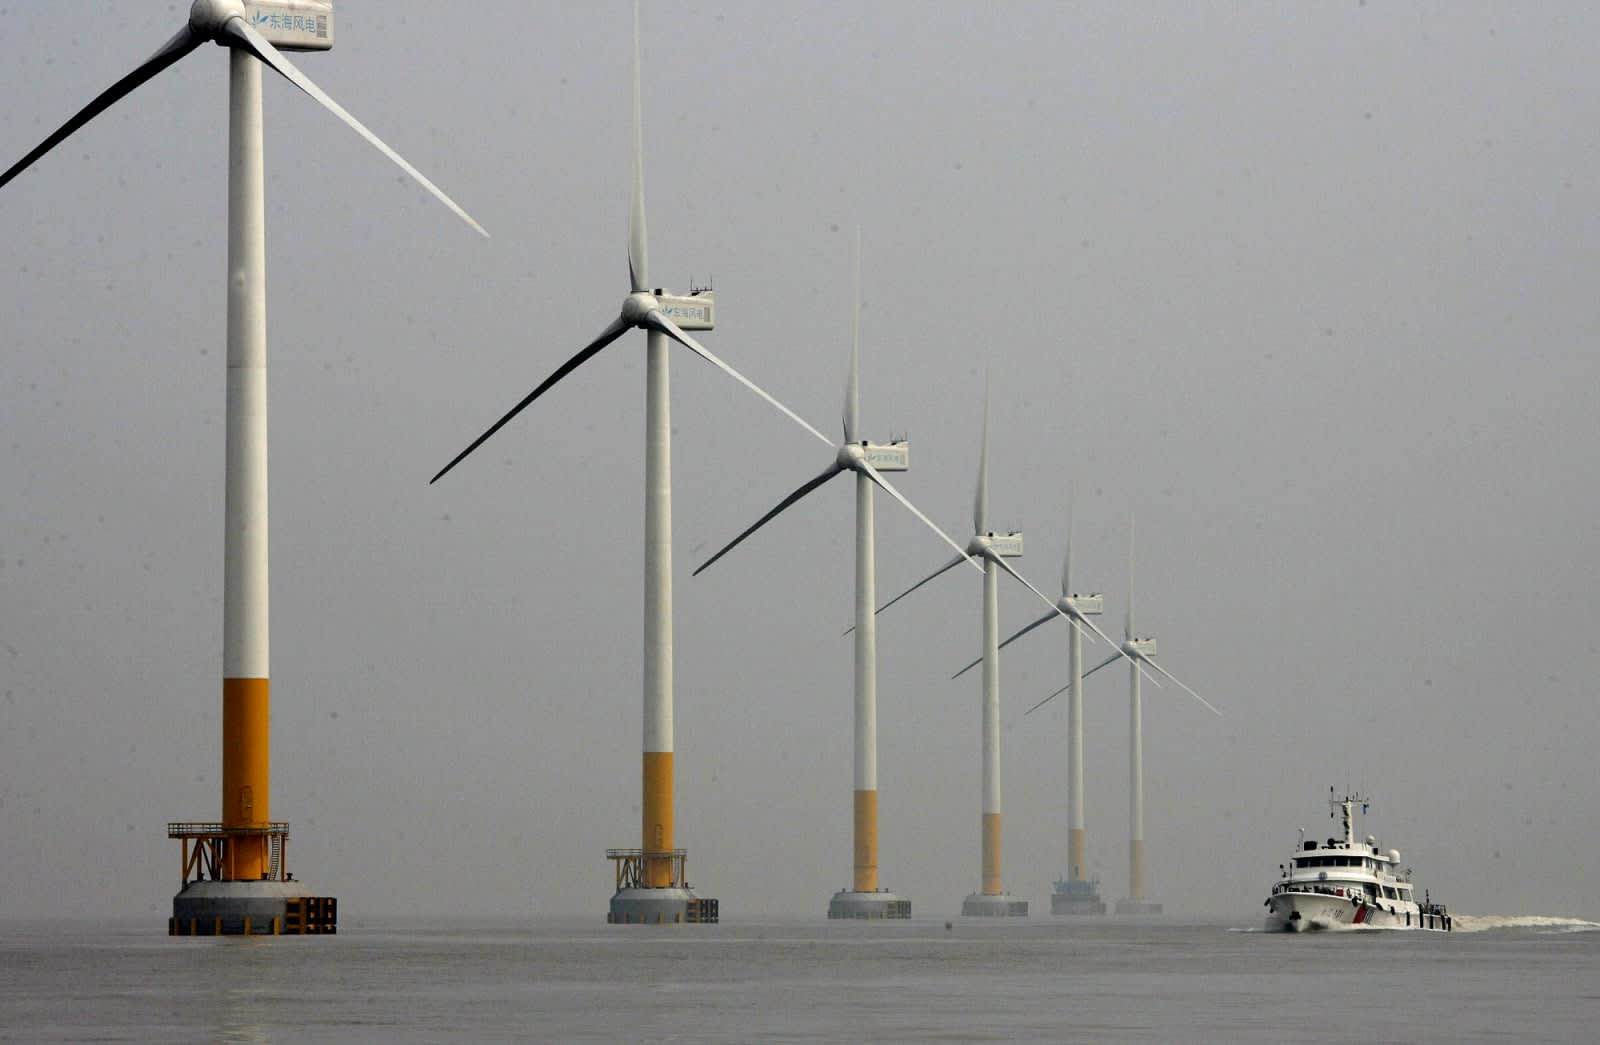 上海市、深海・遠海での洋上風力発電所建設に補助金支給へ